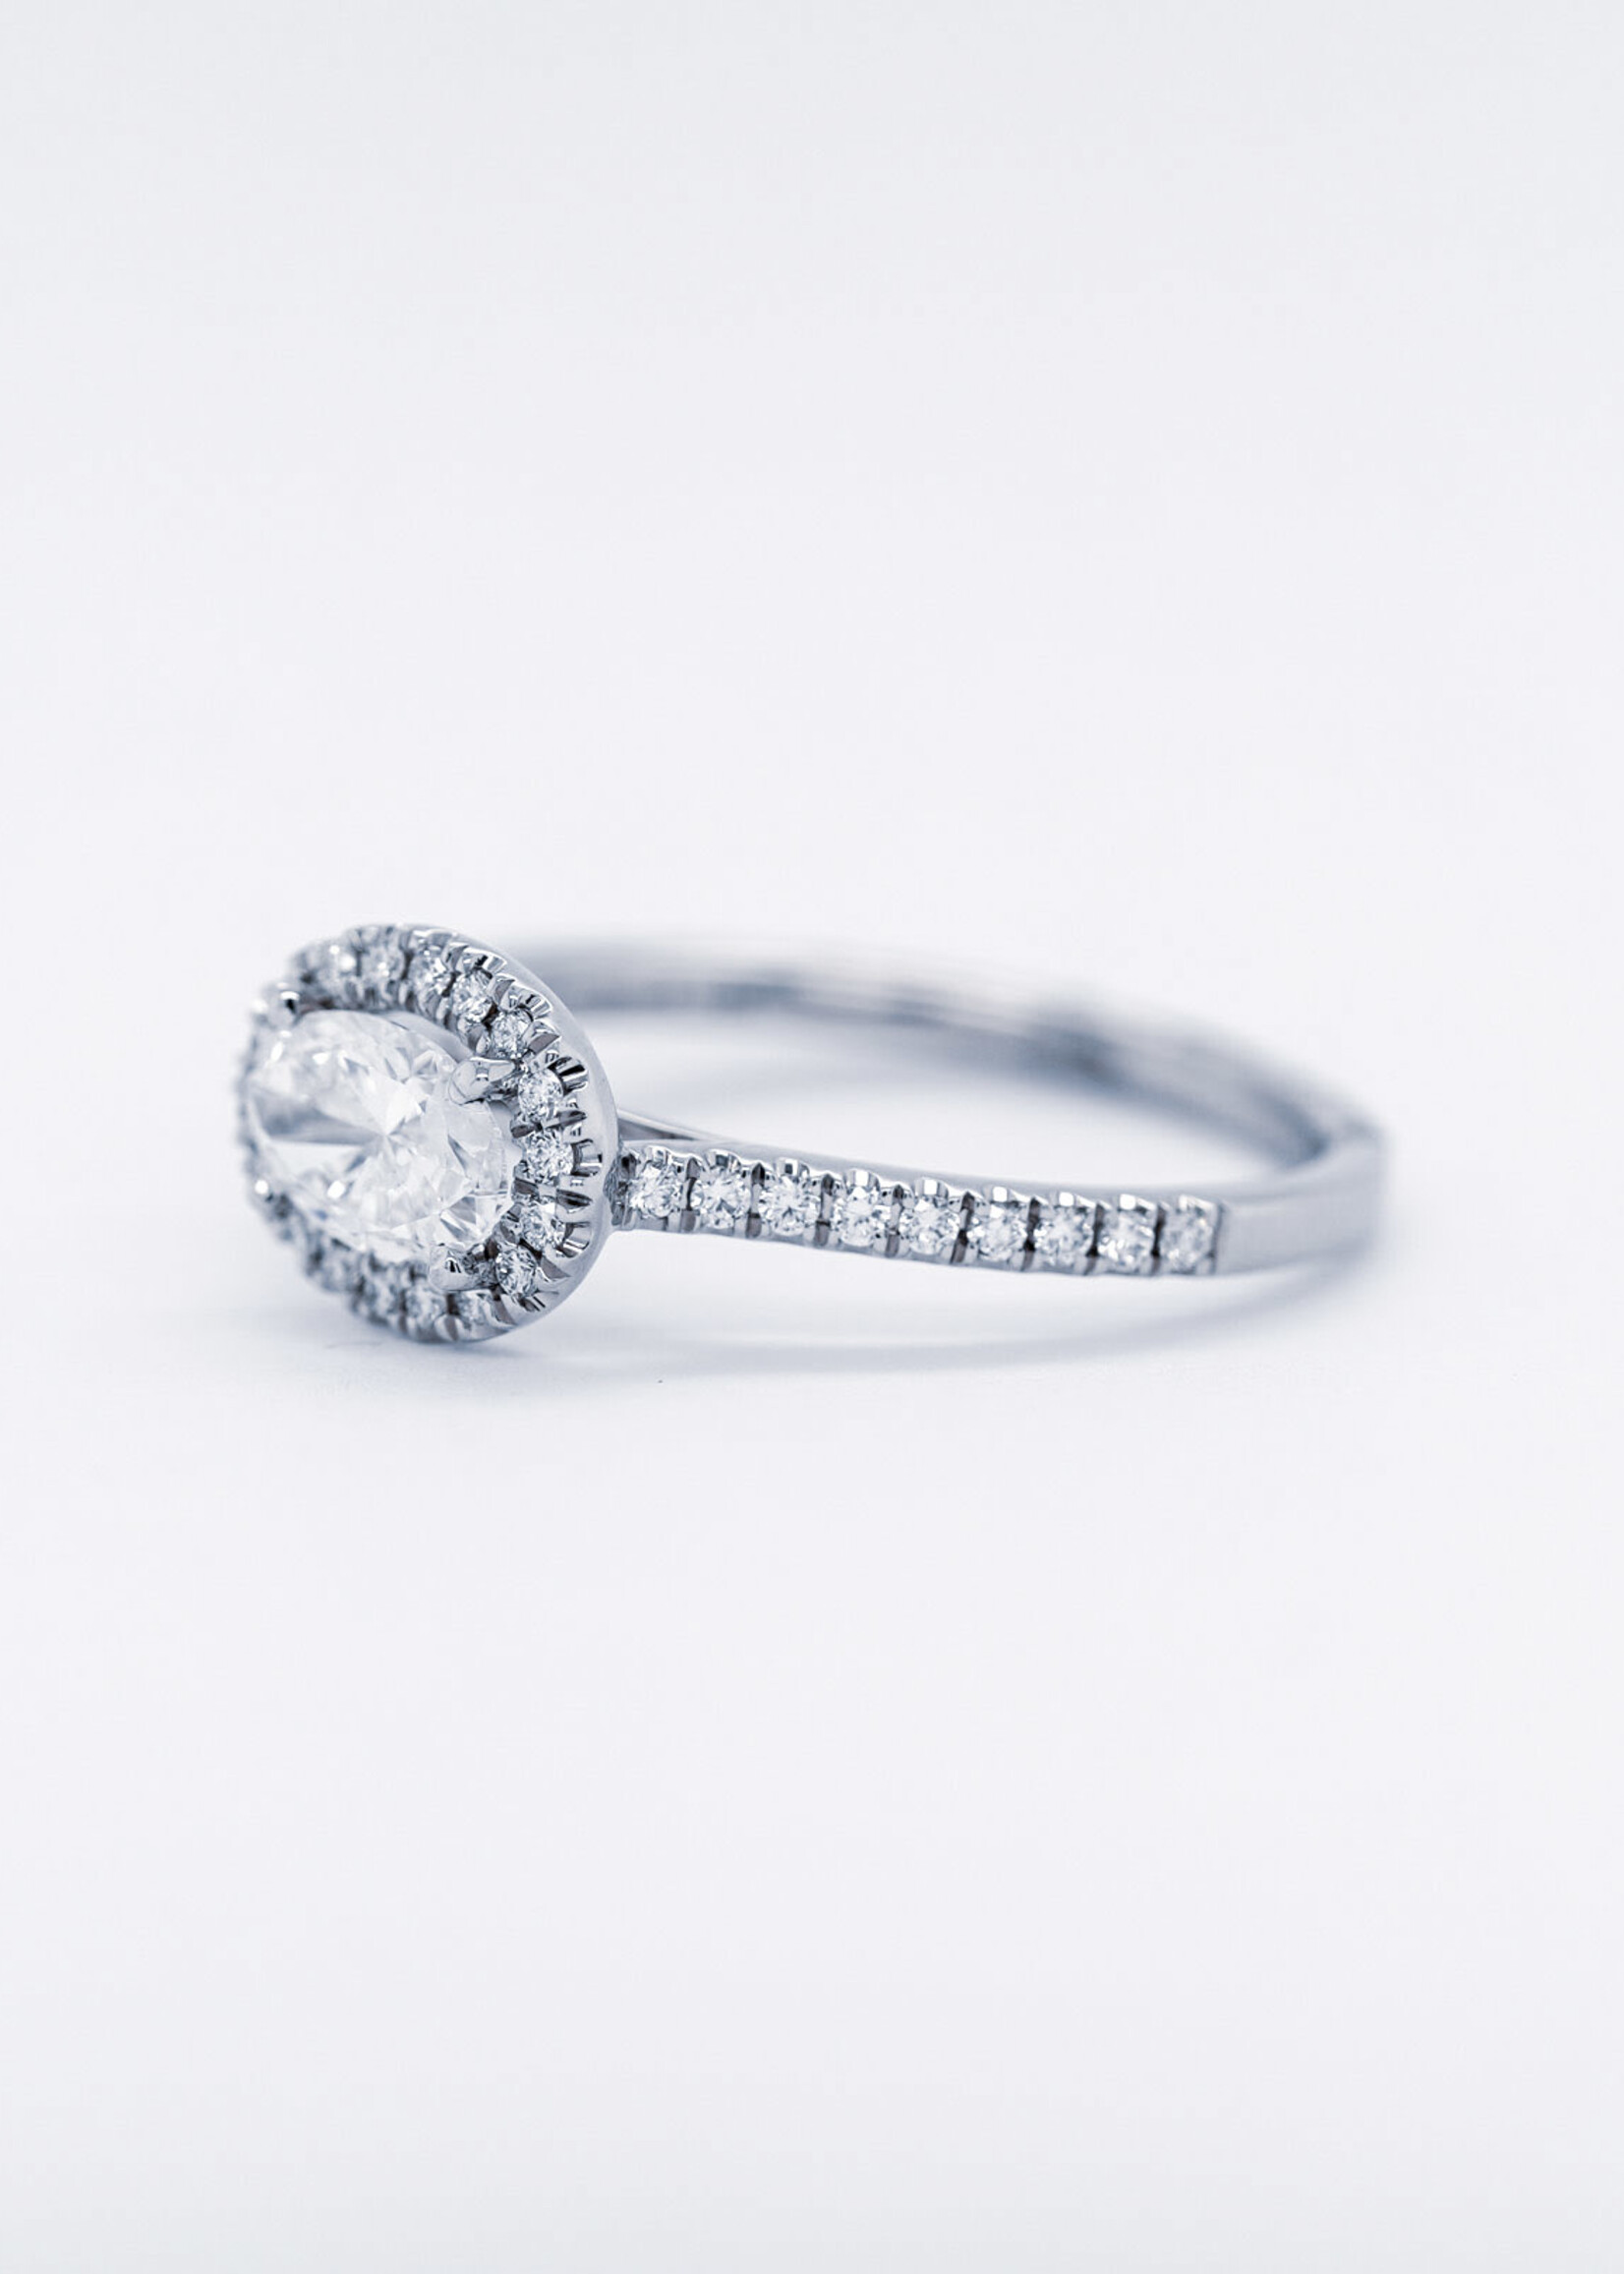 14KW 2.7g .95ctw (.65ctr) E/SI2 Oval Diamond Venetti Halo Engagement Ring (size 6.5)